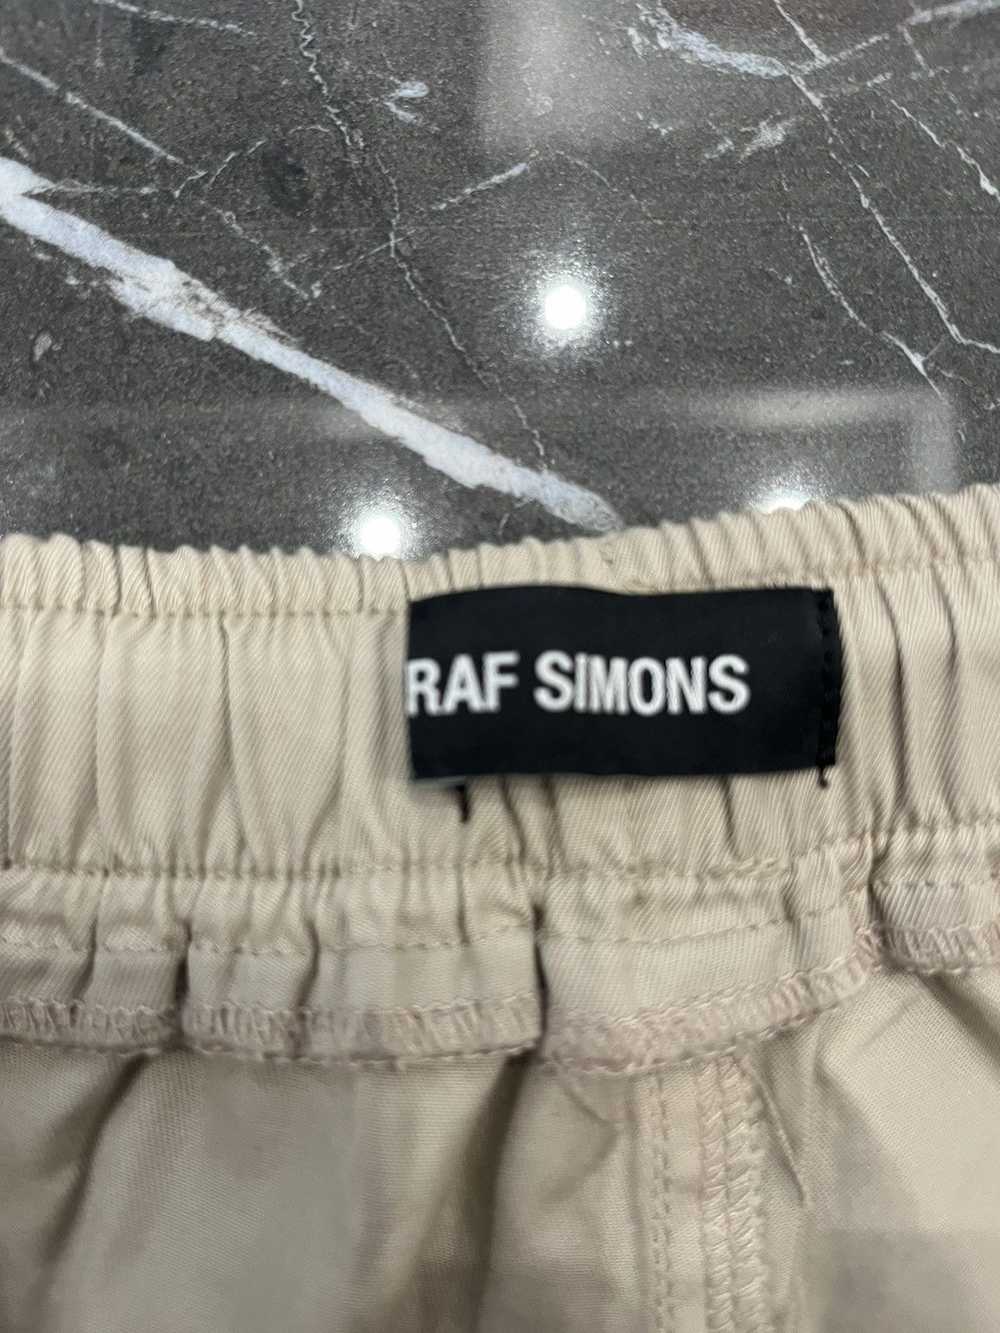 Raf Simons RAF Simons Very Short Shorts with Tape - image 2